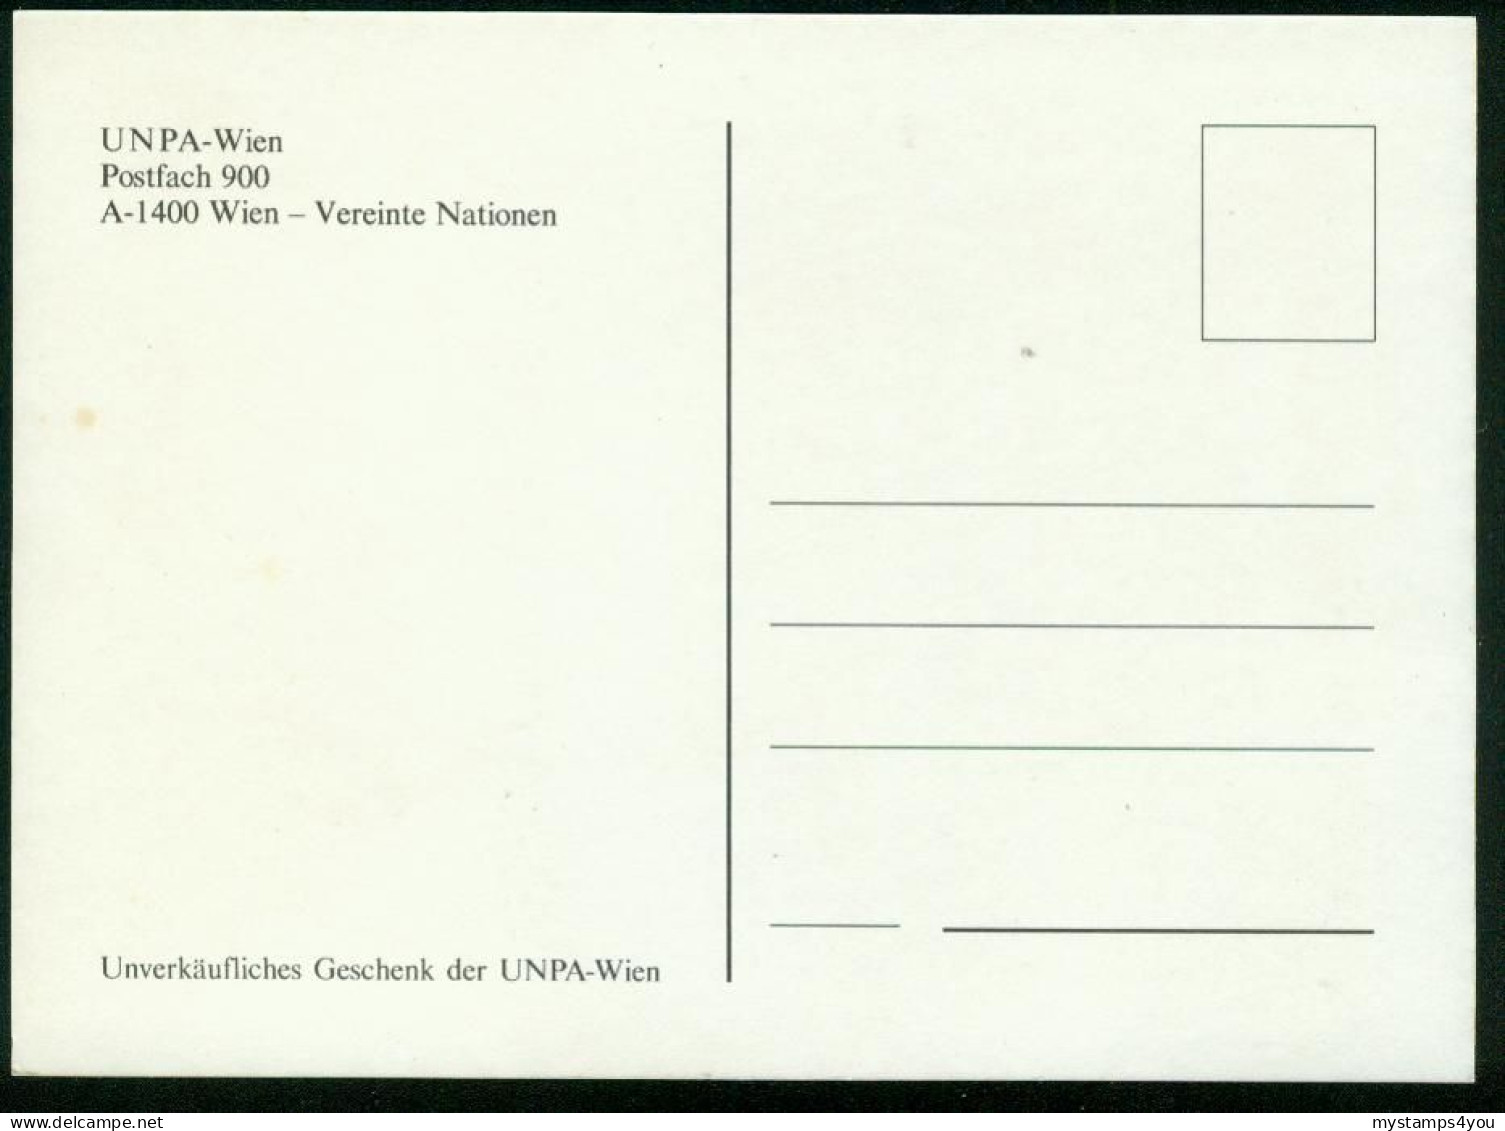 Mk UN New York (UNO) Maximum Card 1989 MiNr 578 | Tenth Anniv Of United Nations Vienna International Centre #max-0078 - Maximumkaarten